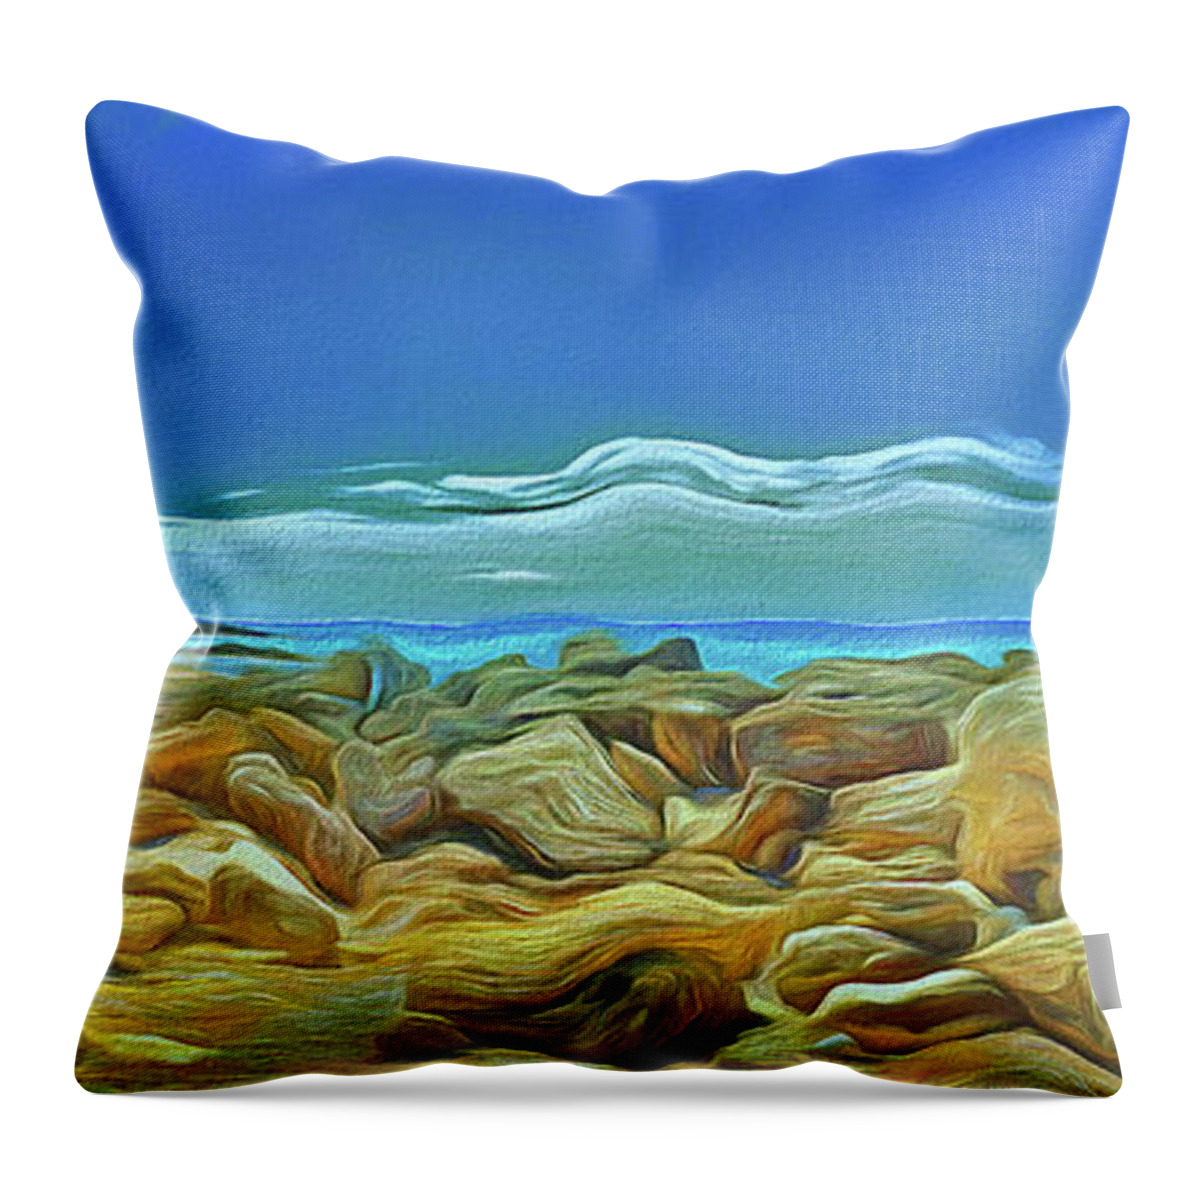 Corfu Throw Pillow featuring the photograph Corfu 3 - Surreal Rocks by Leigh Kemp